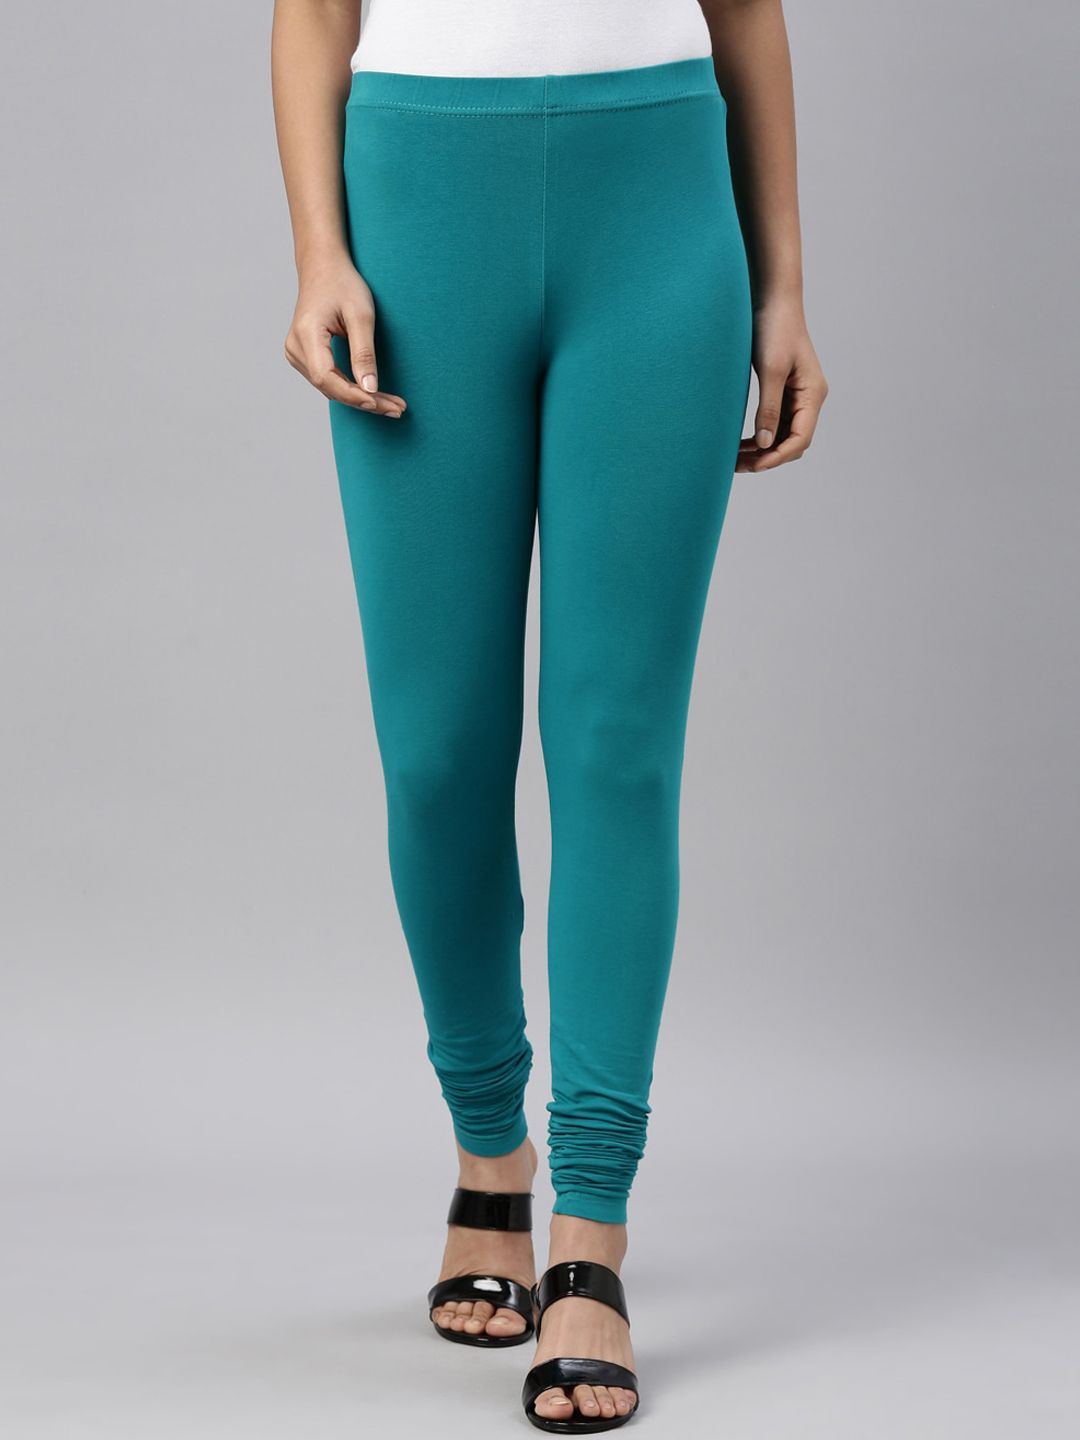 Go Colors Women Sea-Green Solid Churidar-Length Cotton Leggings Price in India